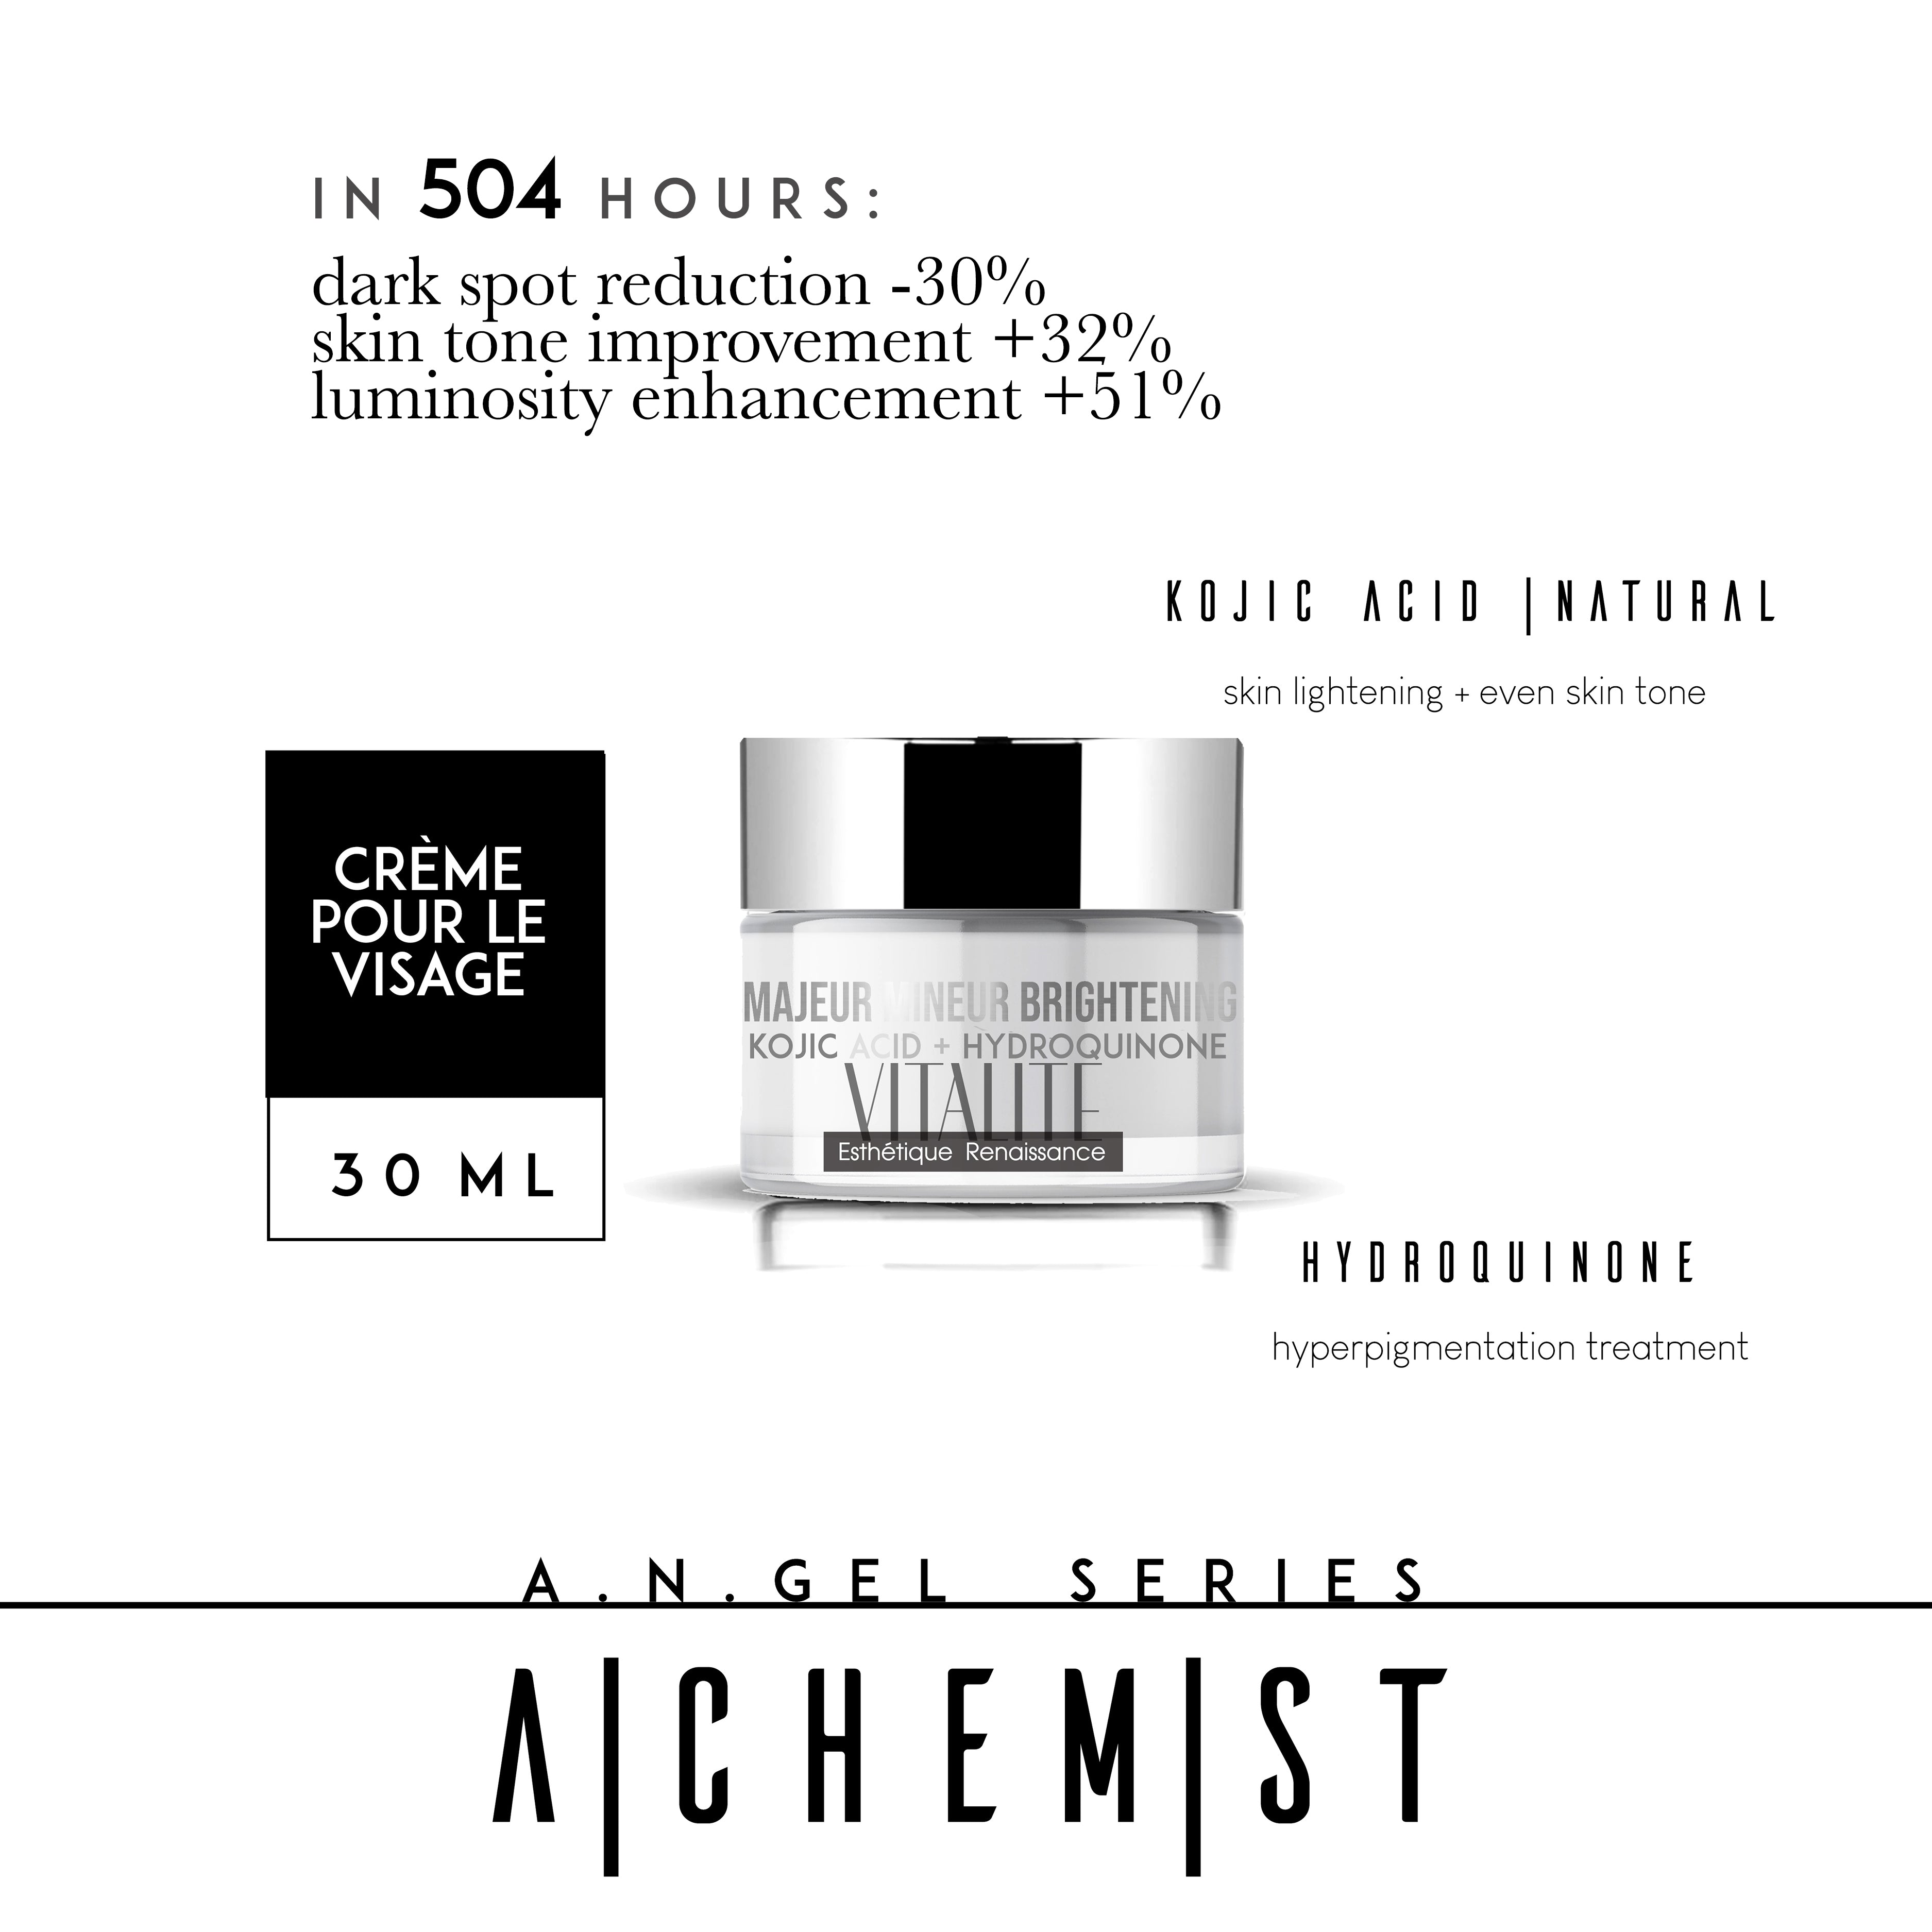 [Esthétique Renaissance] A.N.GEL Series Skin Mantra Moisturizer 30ml